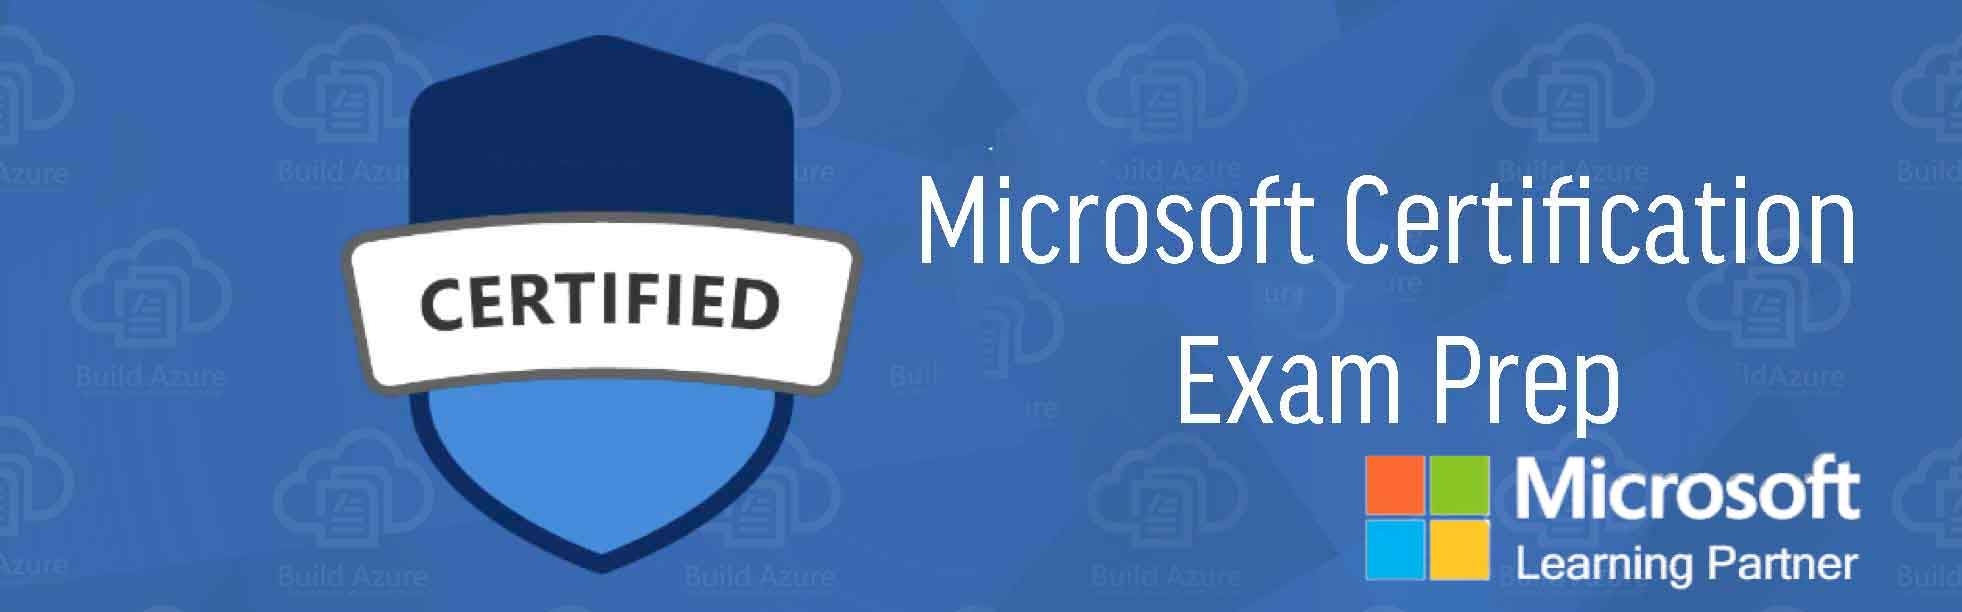 Microsoft Certification Exam Prep